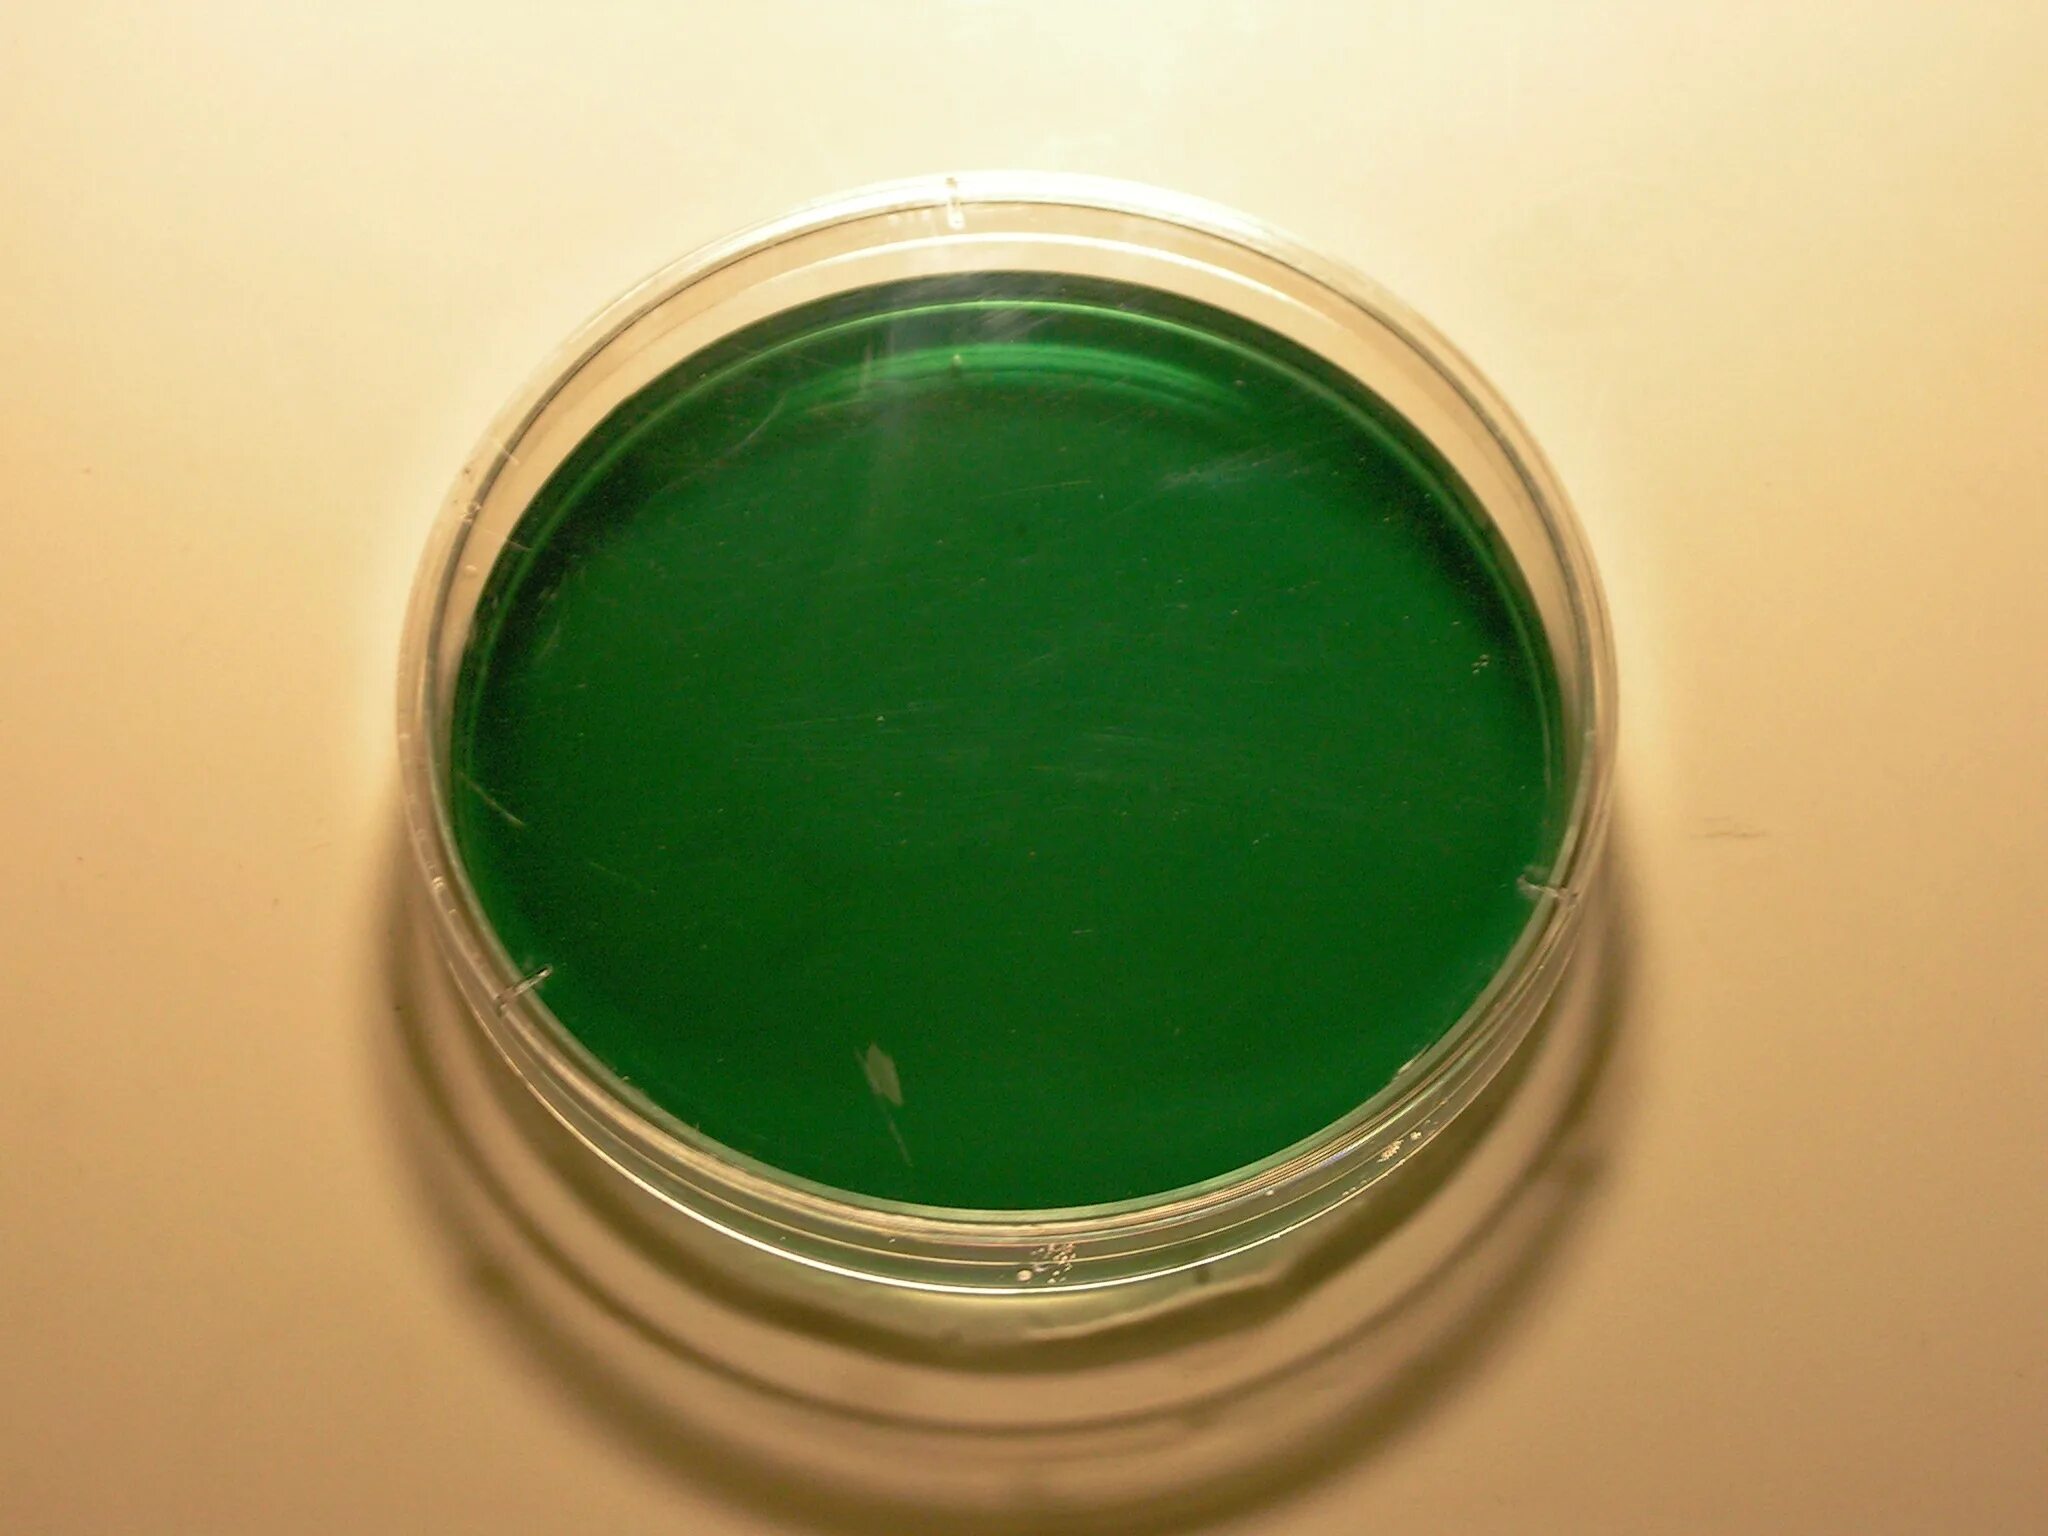 Ба агар. Biggy агар. Ярко-зеленый агар. Сальмонелла на питательных средах. Агар зеленого цвета для бактерий.